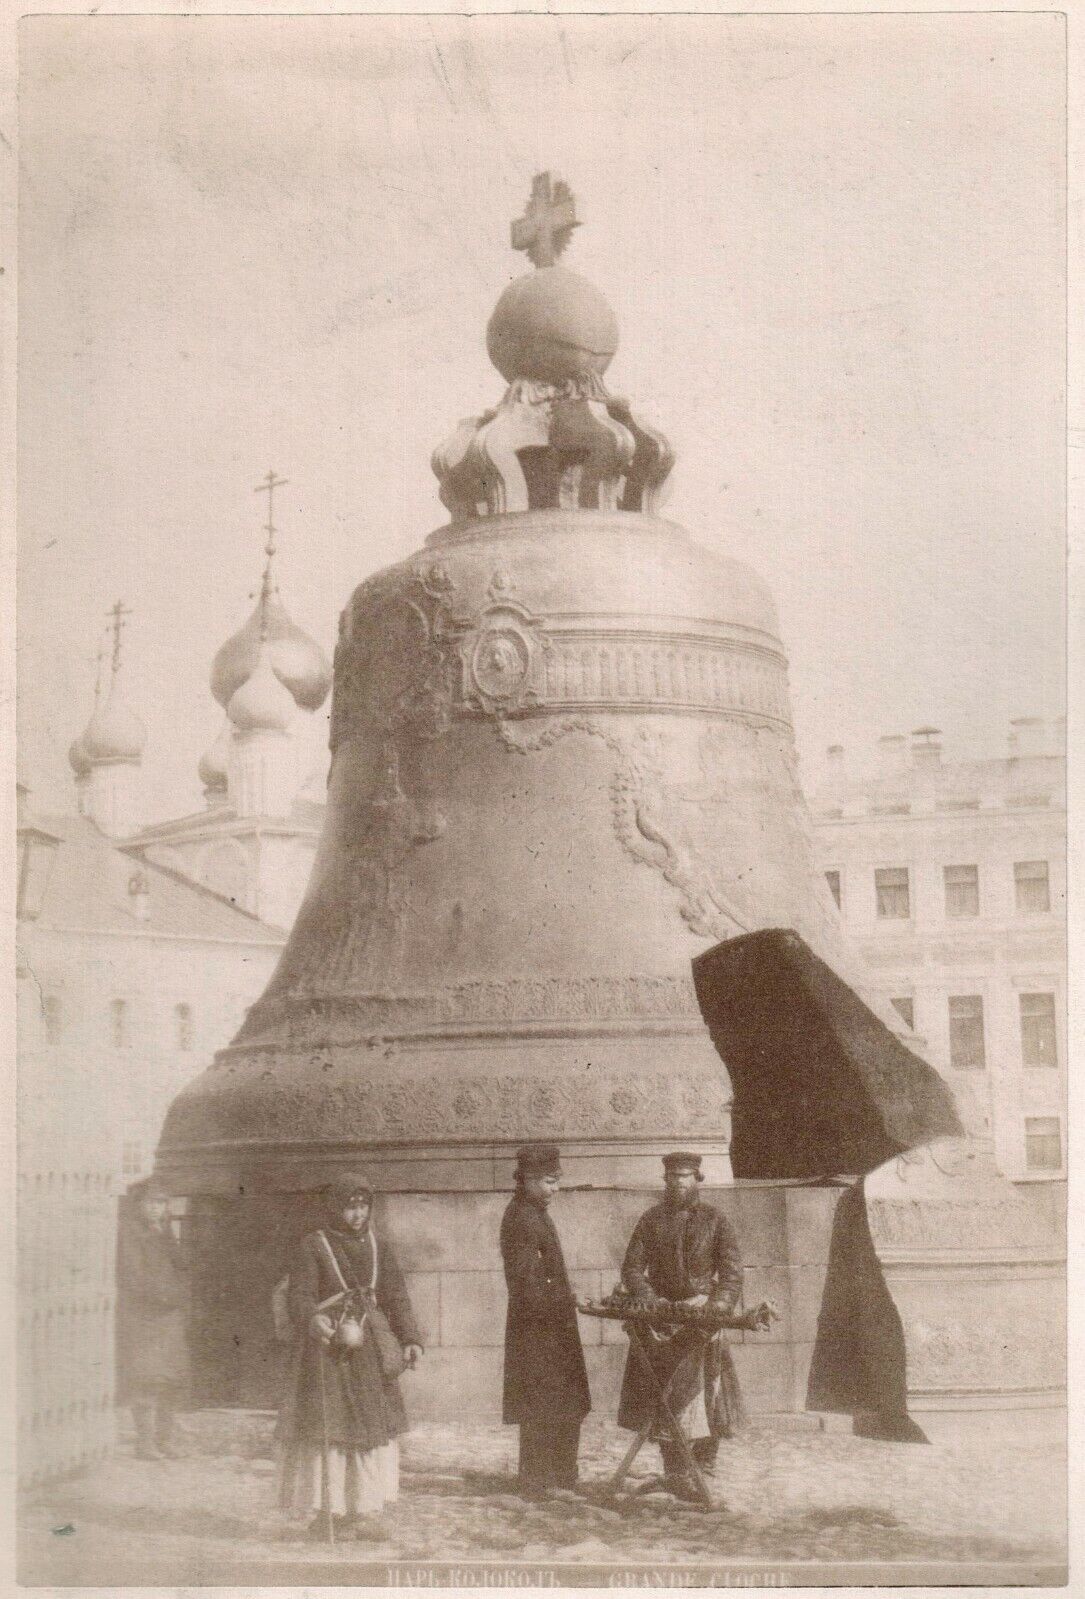 Russia.Russia.Moscow.Москва.The Great Bell.Tsar Kolokol.Photo 13.6x20.4cm.1870